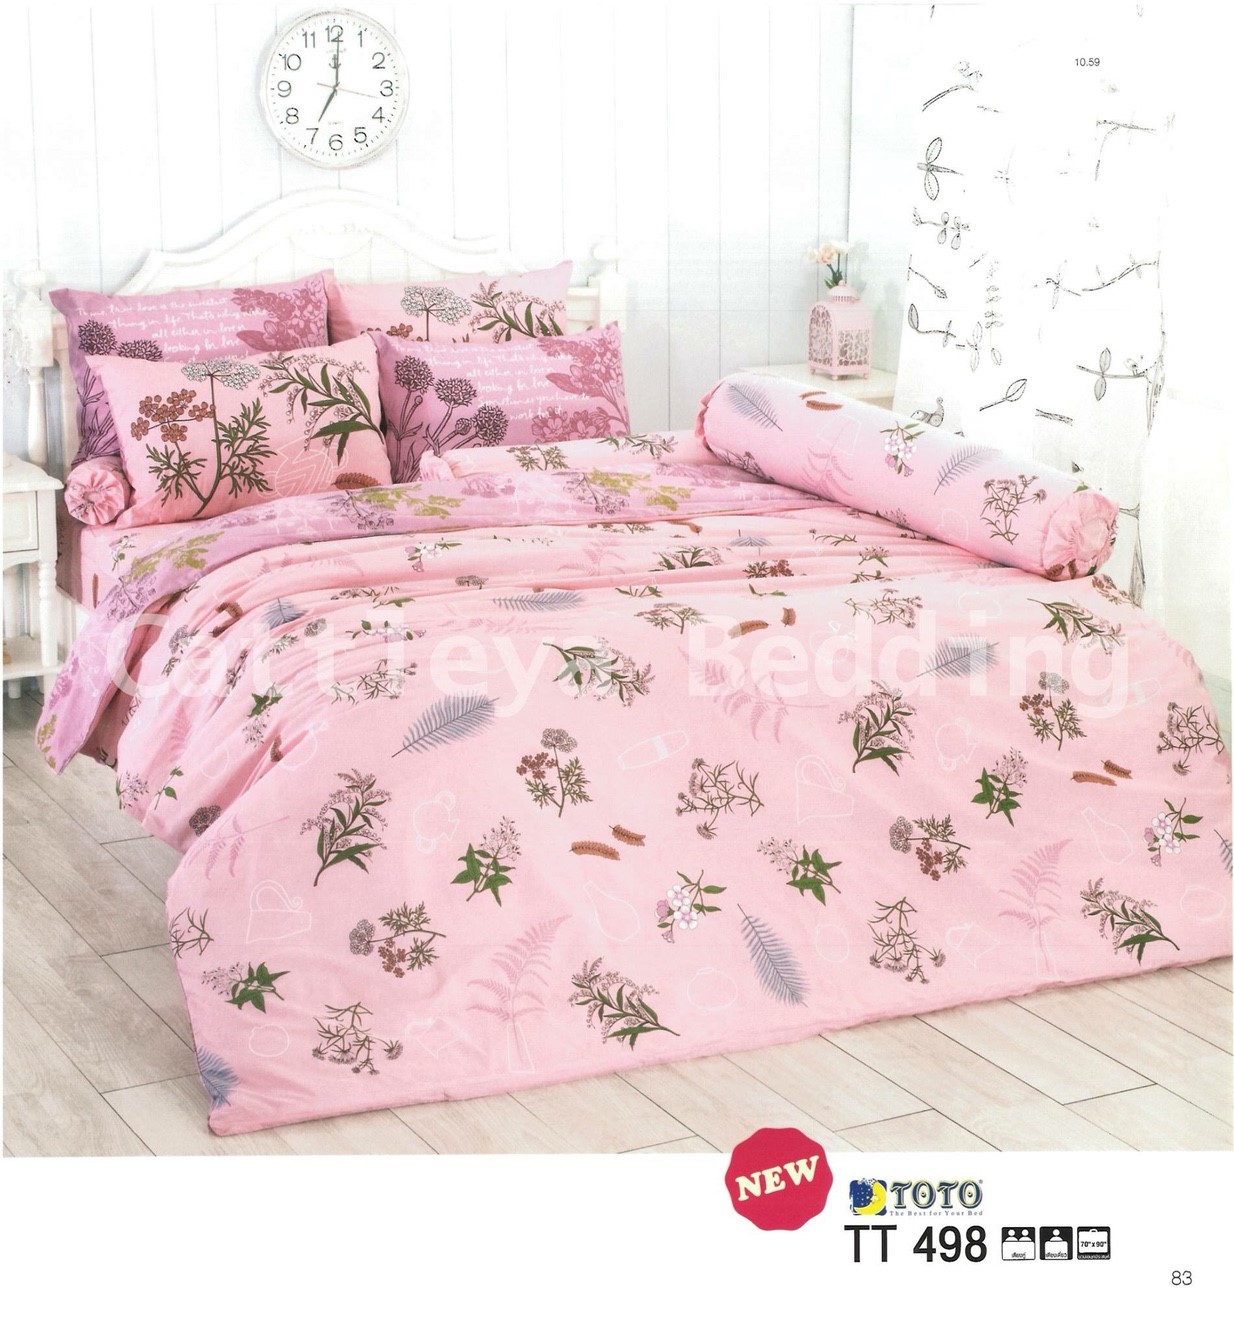 TOTO ชุดผ้าปูที่นอน / ชุดผ้าปู+นวม TT 498 ( 3.5 , 5 , 6 ฟุต ) TT โตโต้ wonderful bedding bed ชุดผ้าปู ที่ นอน ชุดที่นอน ผ้านวม 498